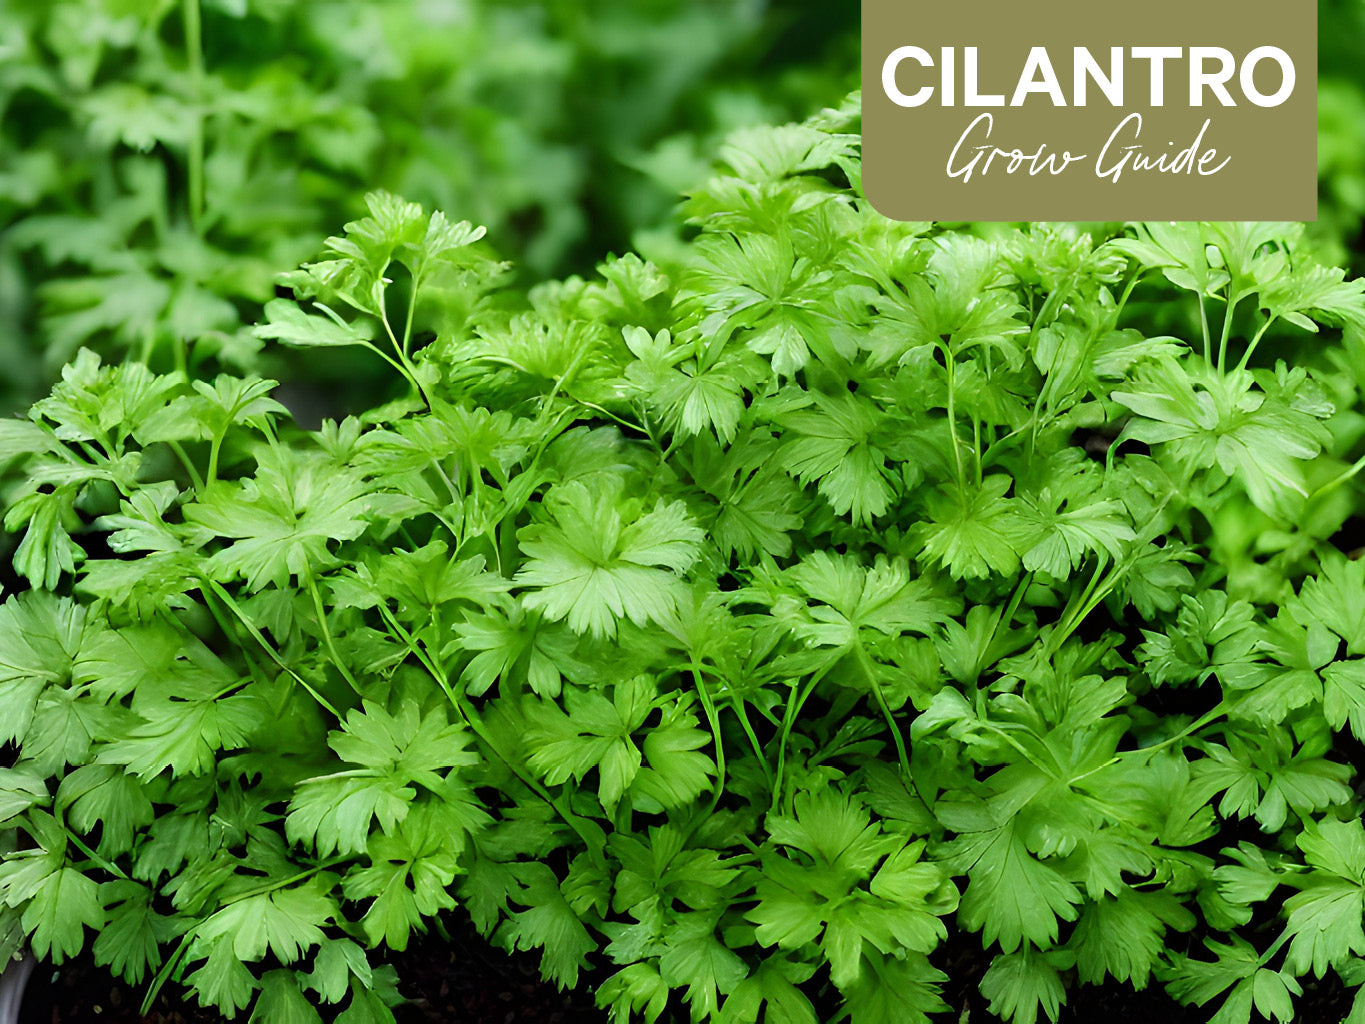 Cilantro Grow Guide: How to Plant, Grow and Harvest Cilantro